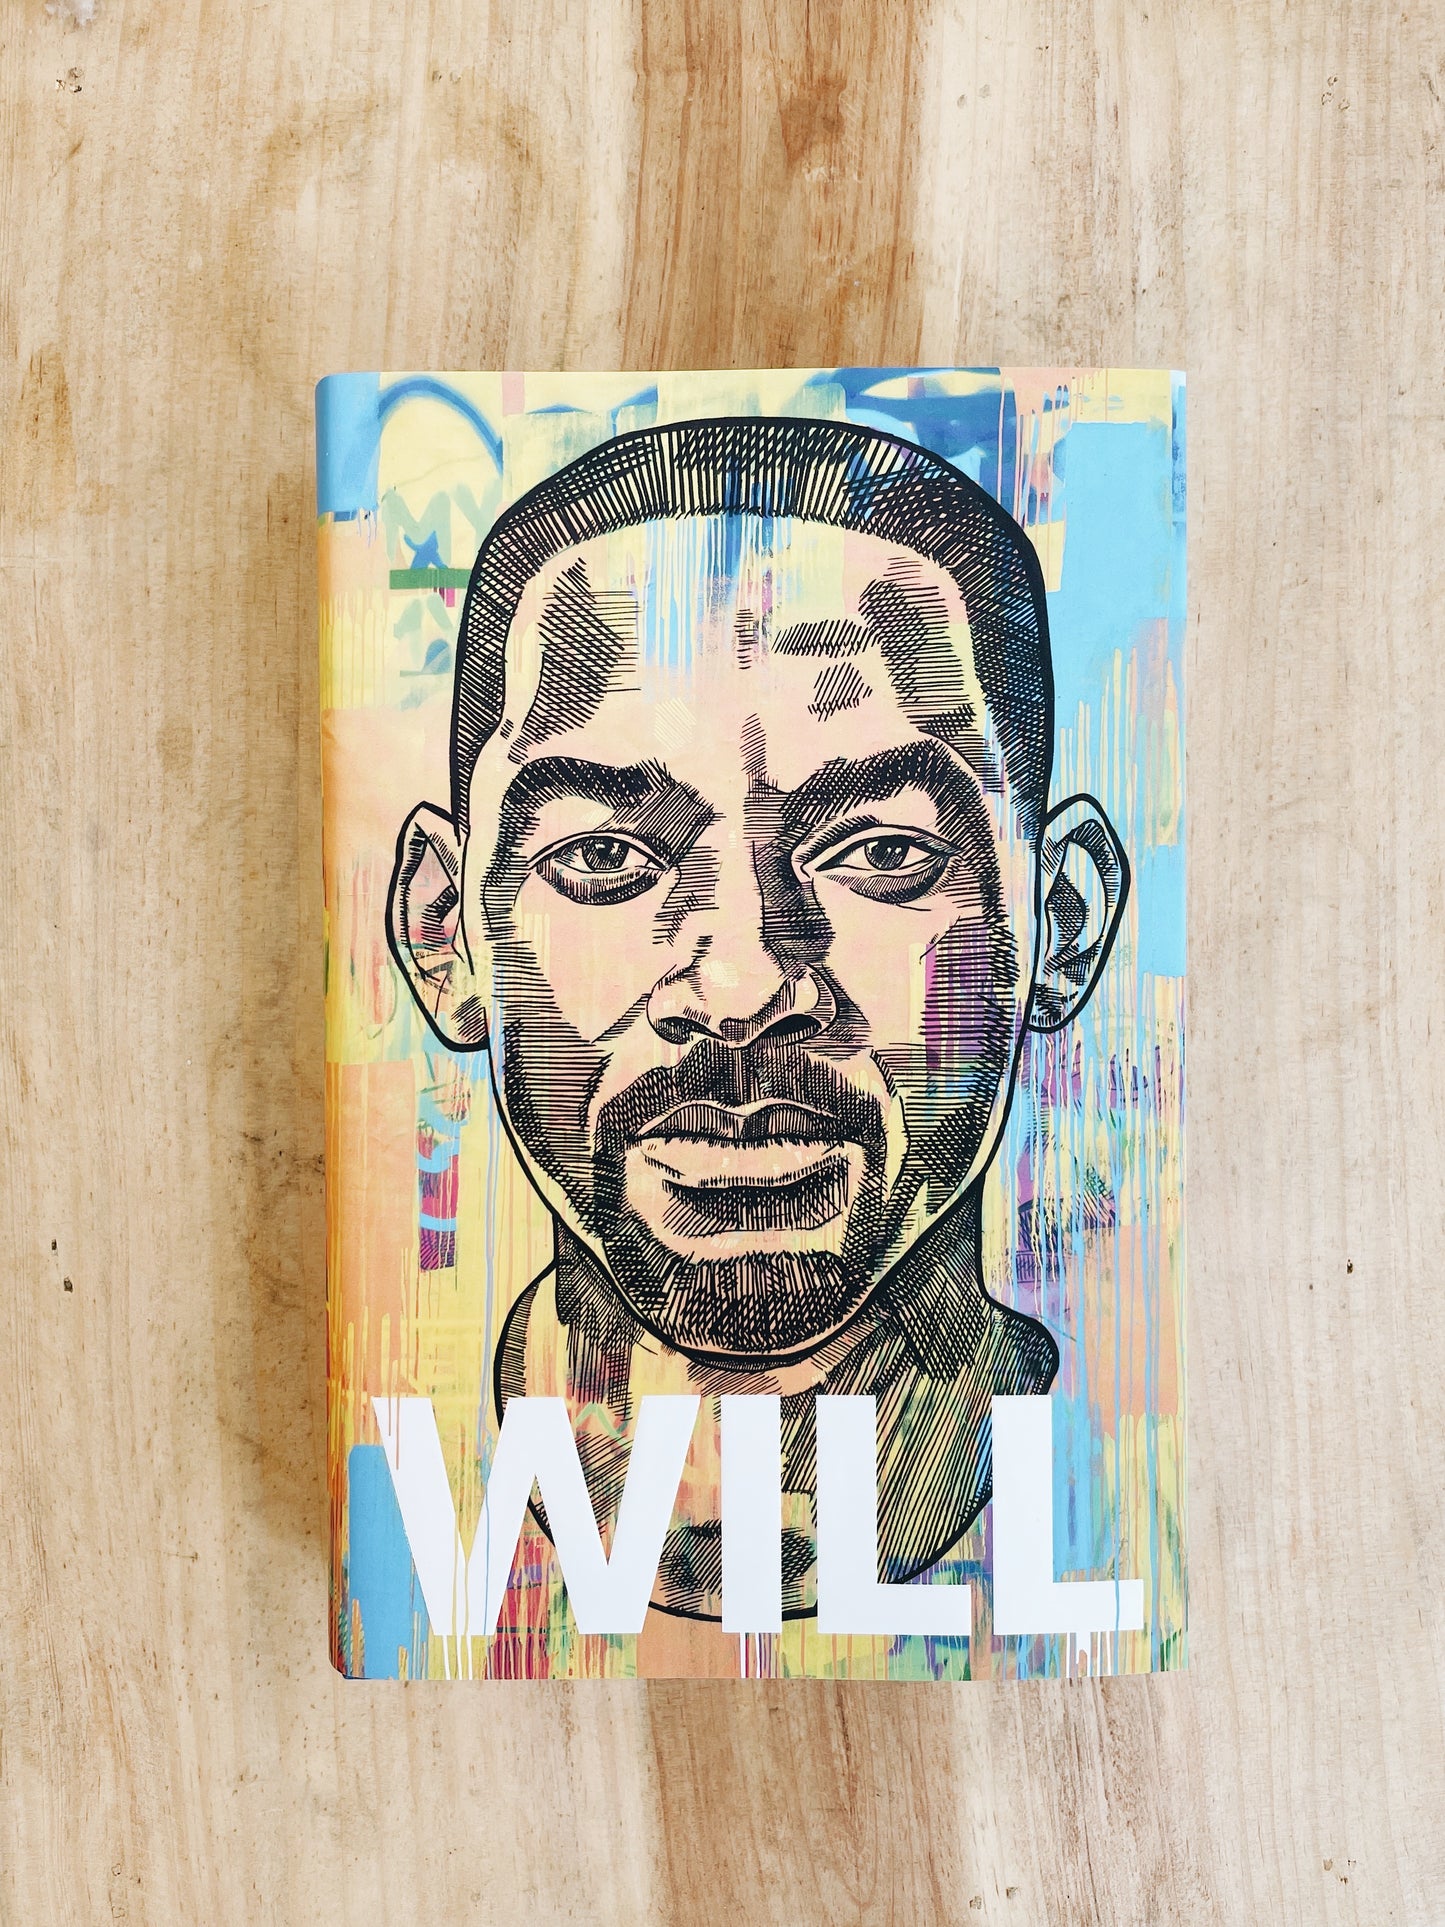 Will Smith - Will